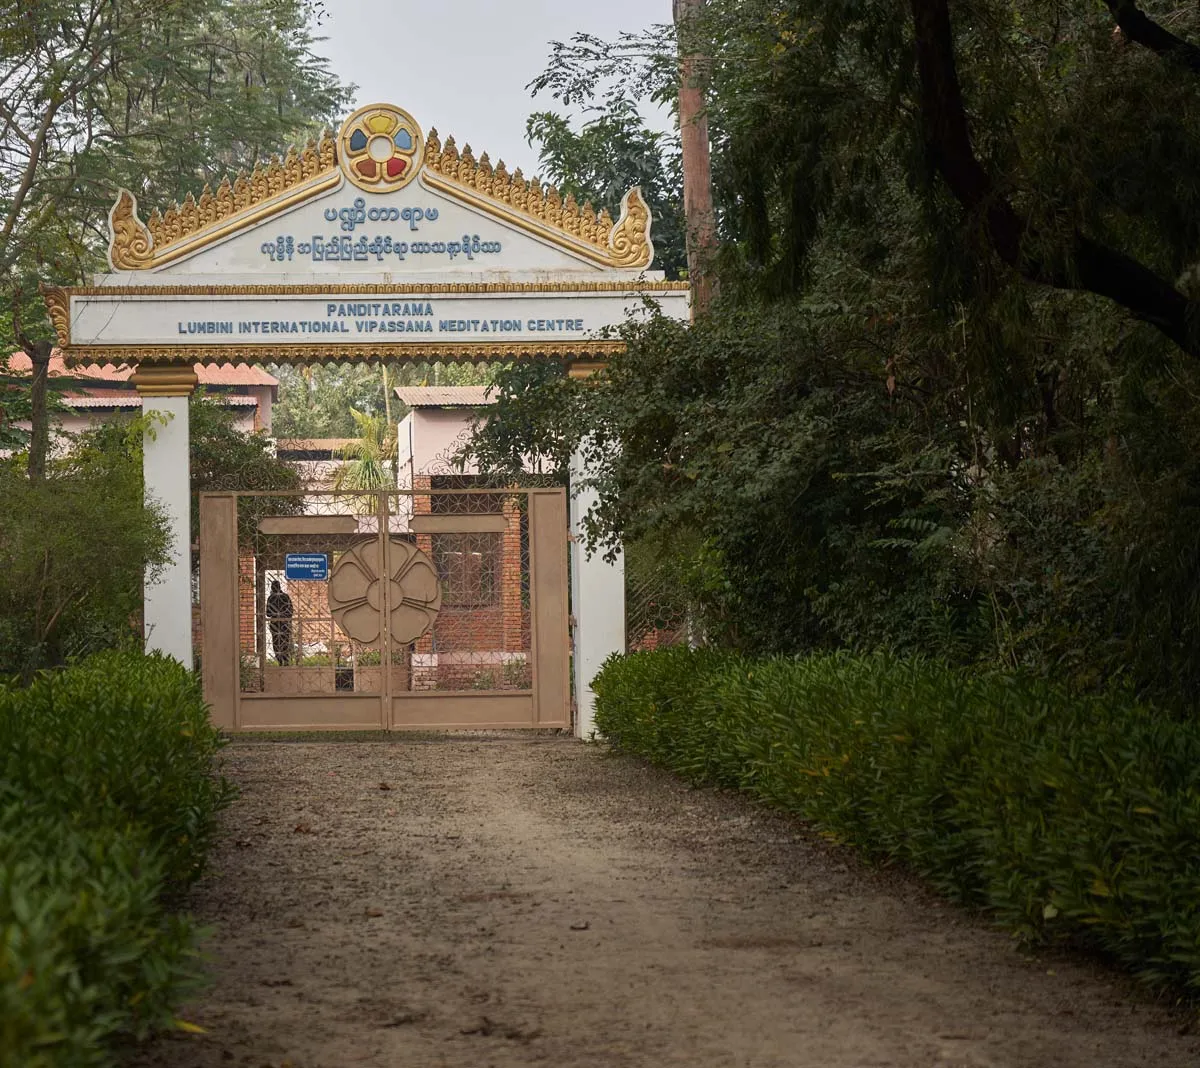 The gate into Panditarama, the meditation centre